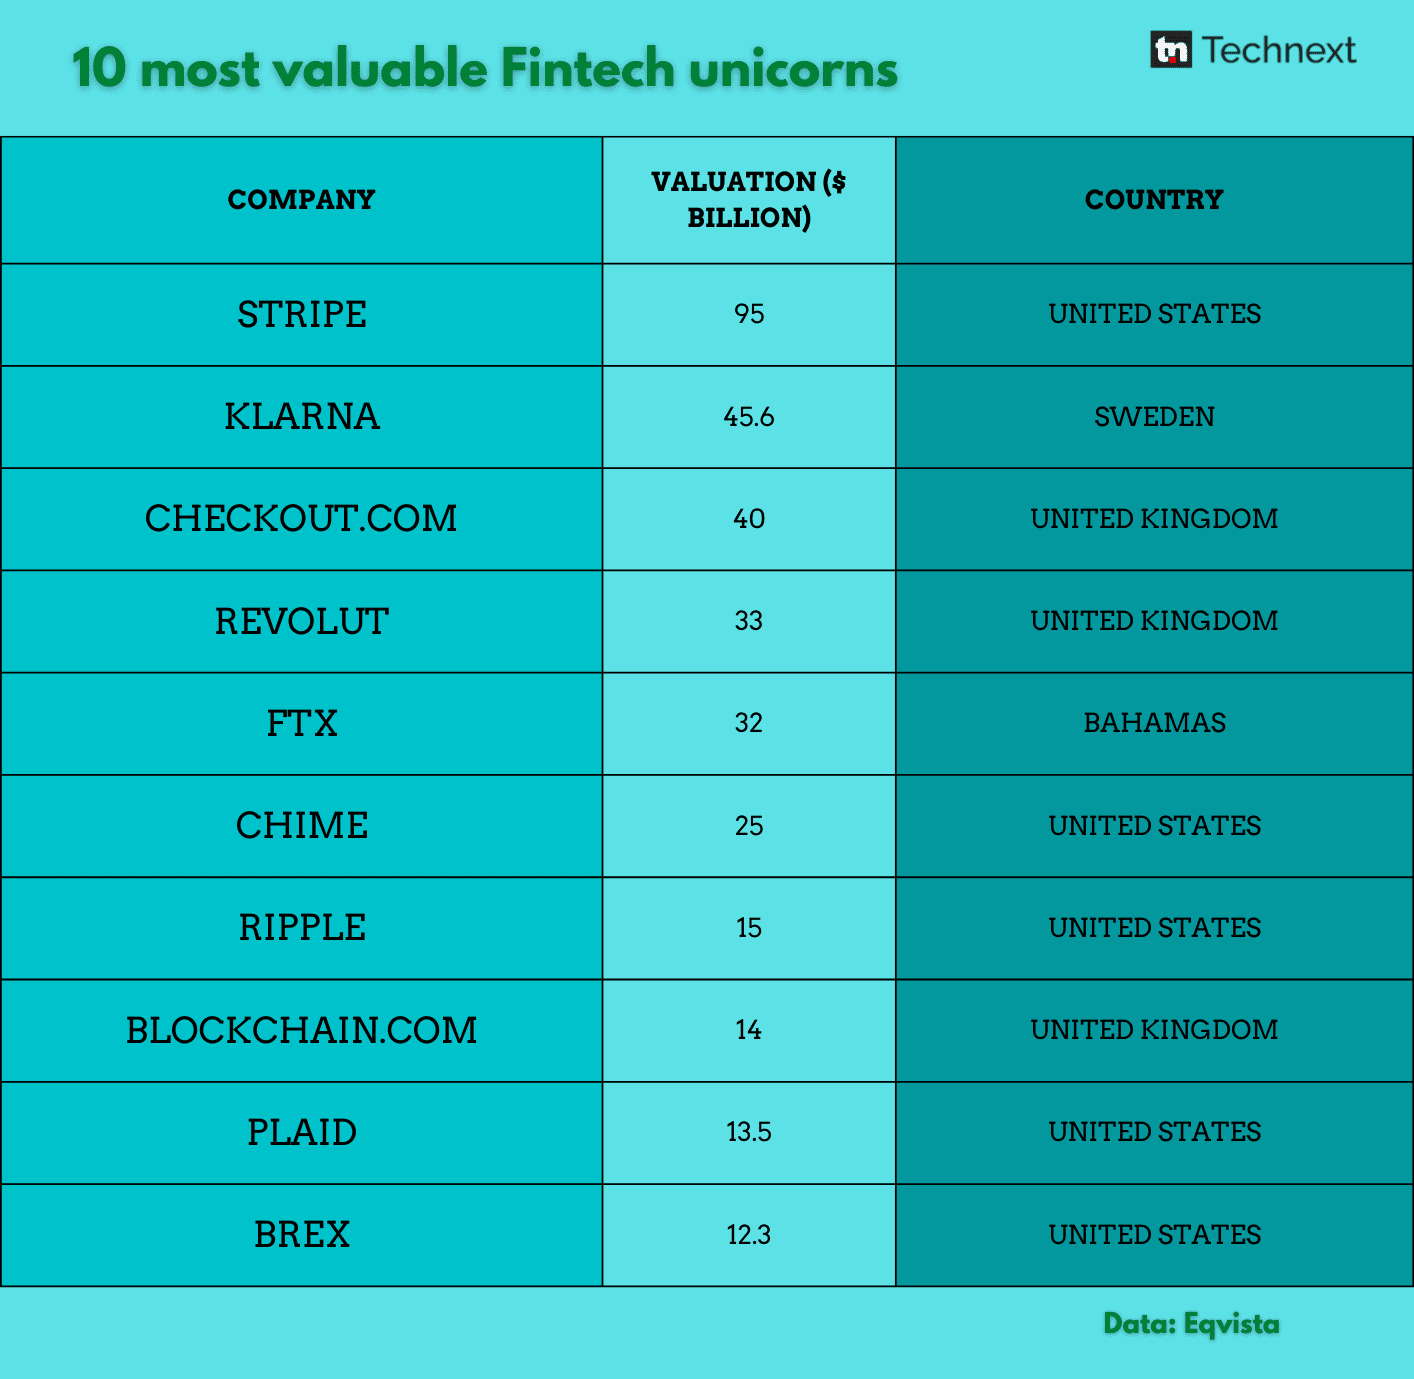 Most valuable Fintech unicorn companies